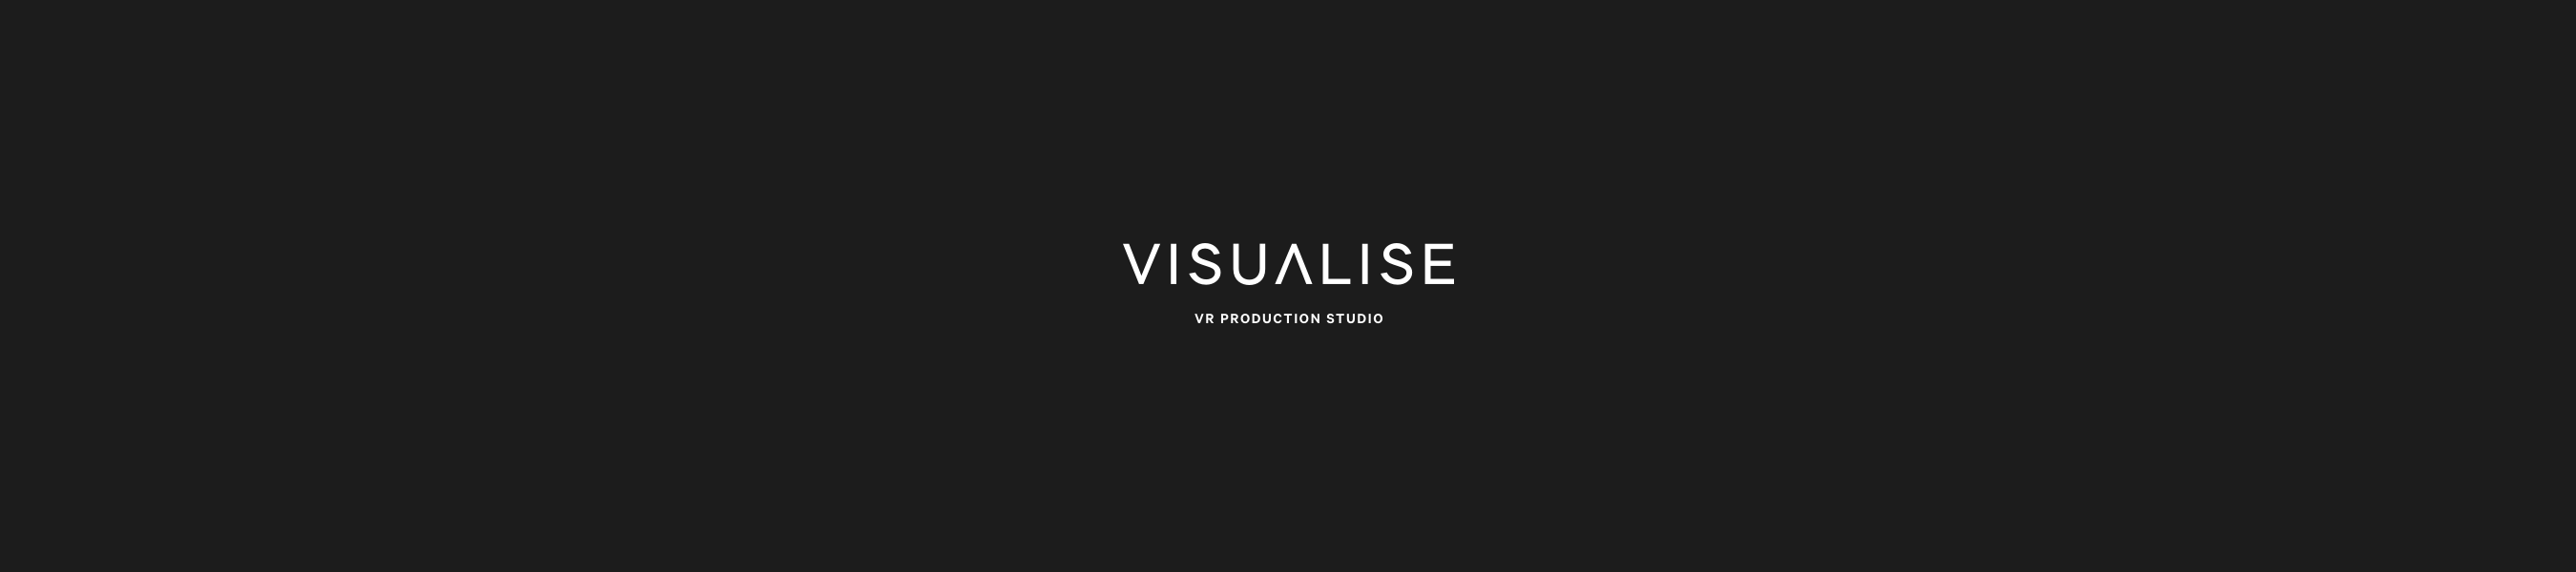 VR Design and Development